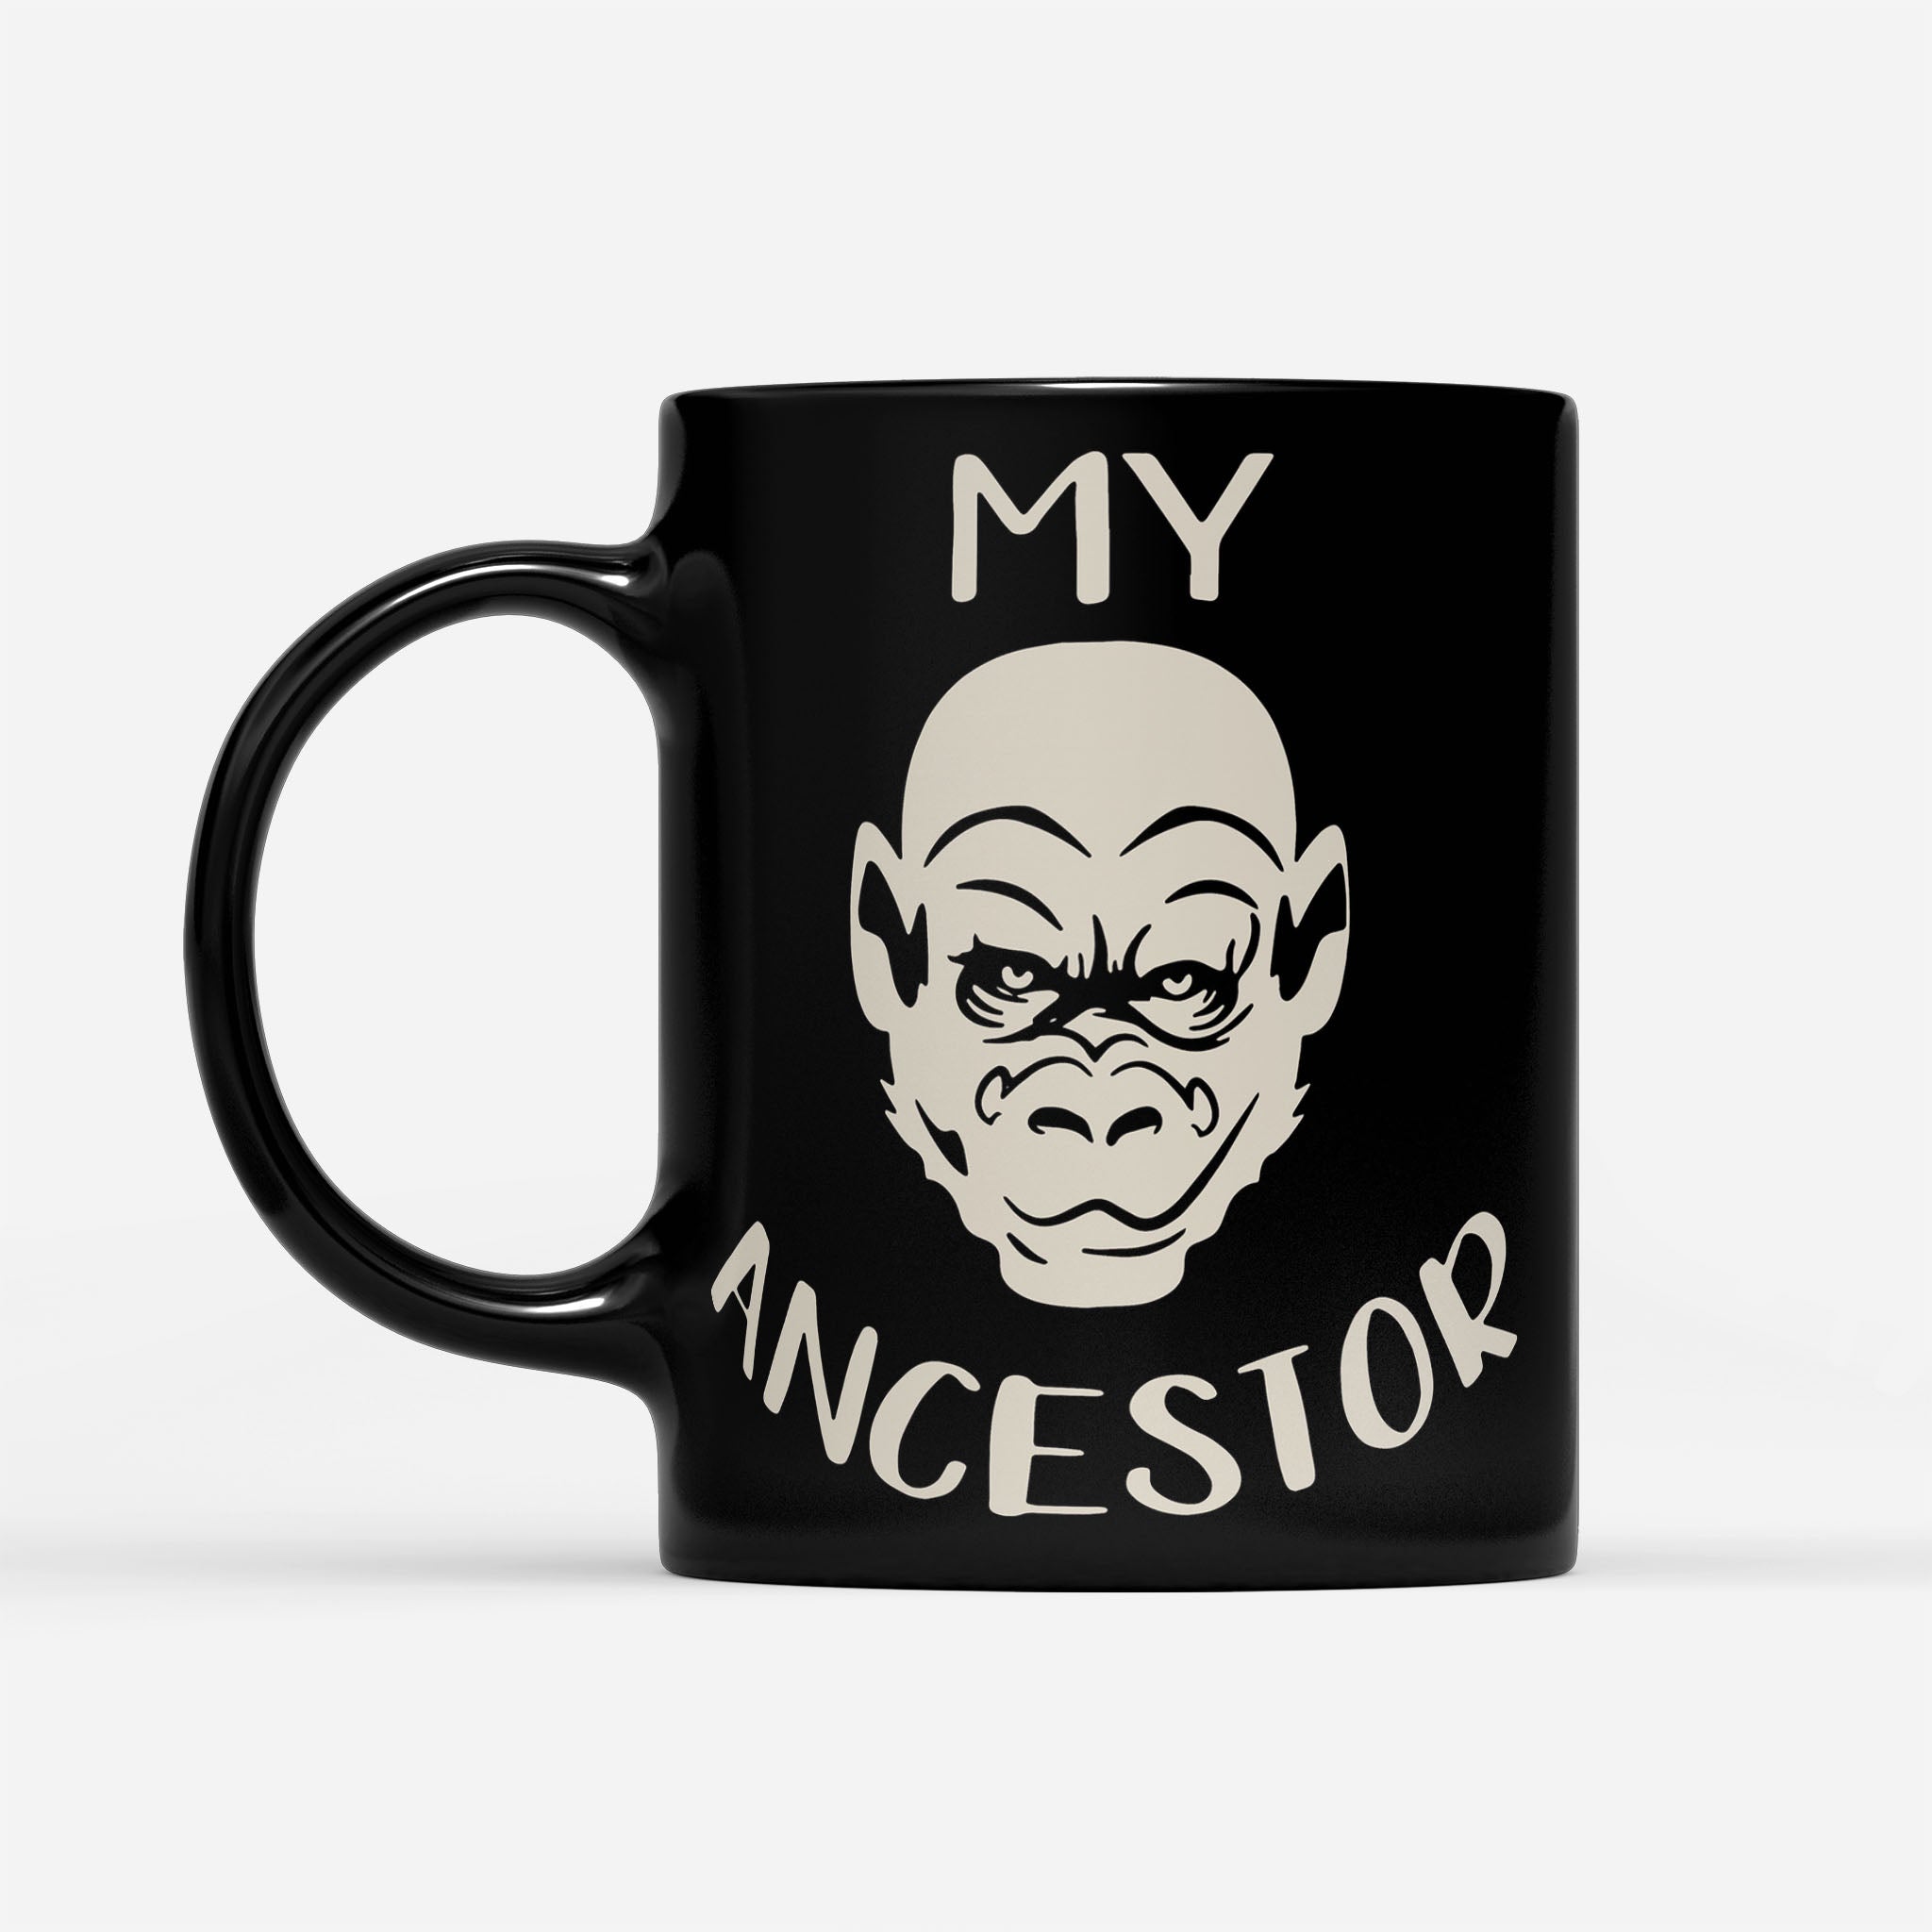 My Ancestor - Black Mug